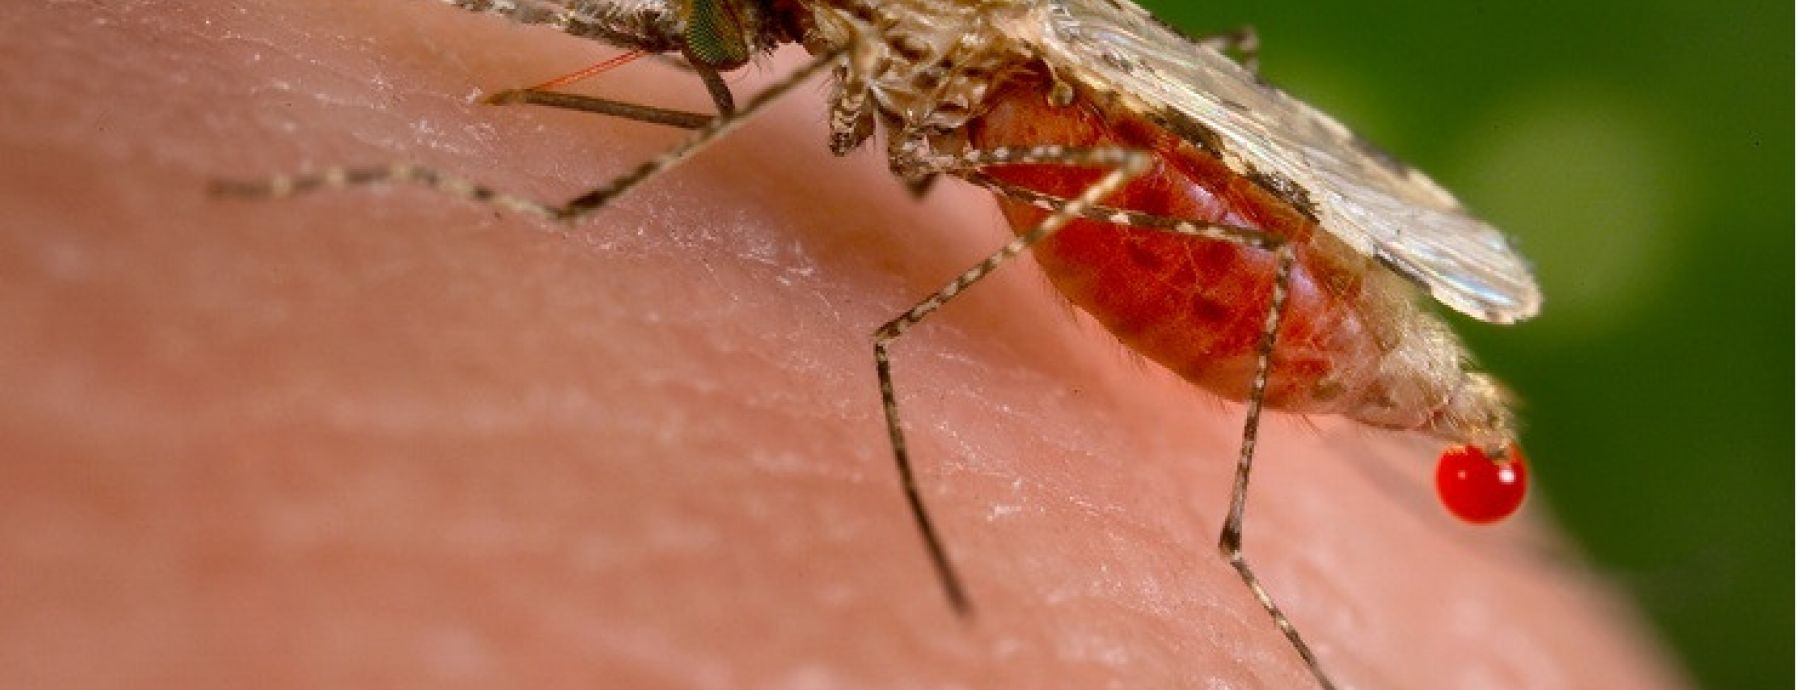 More Zika may be better than less